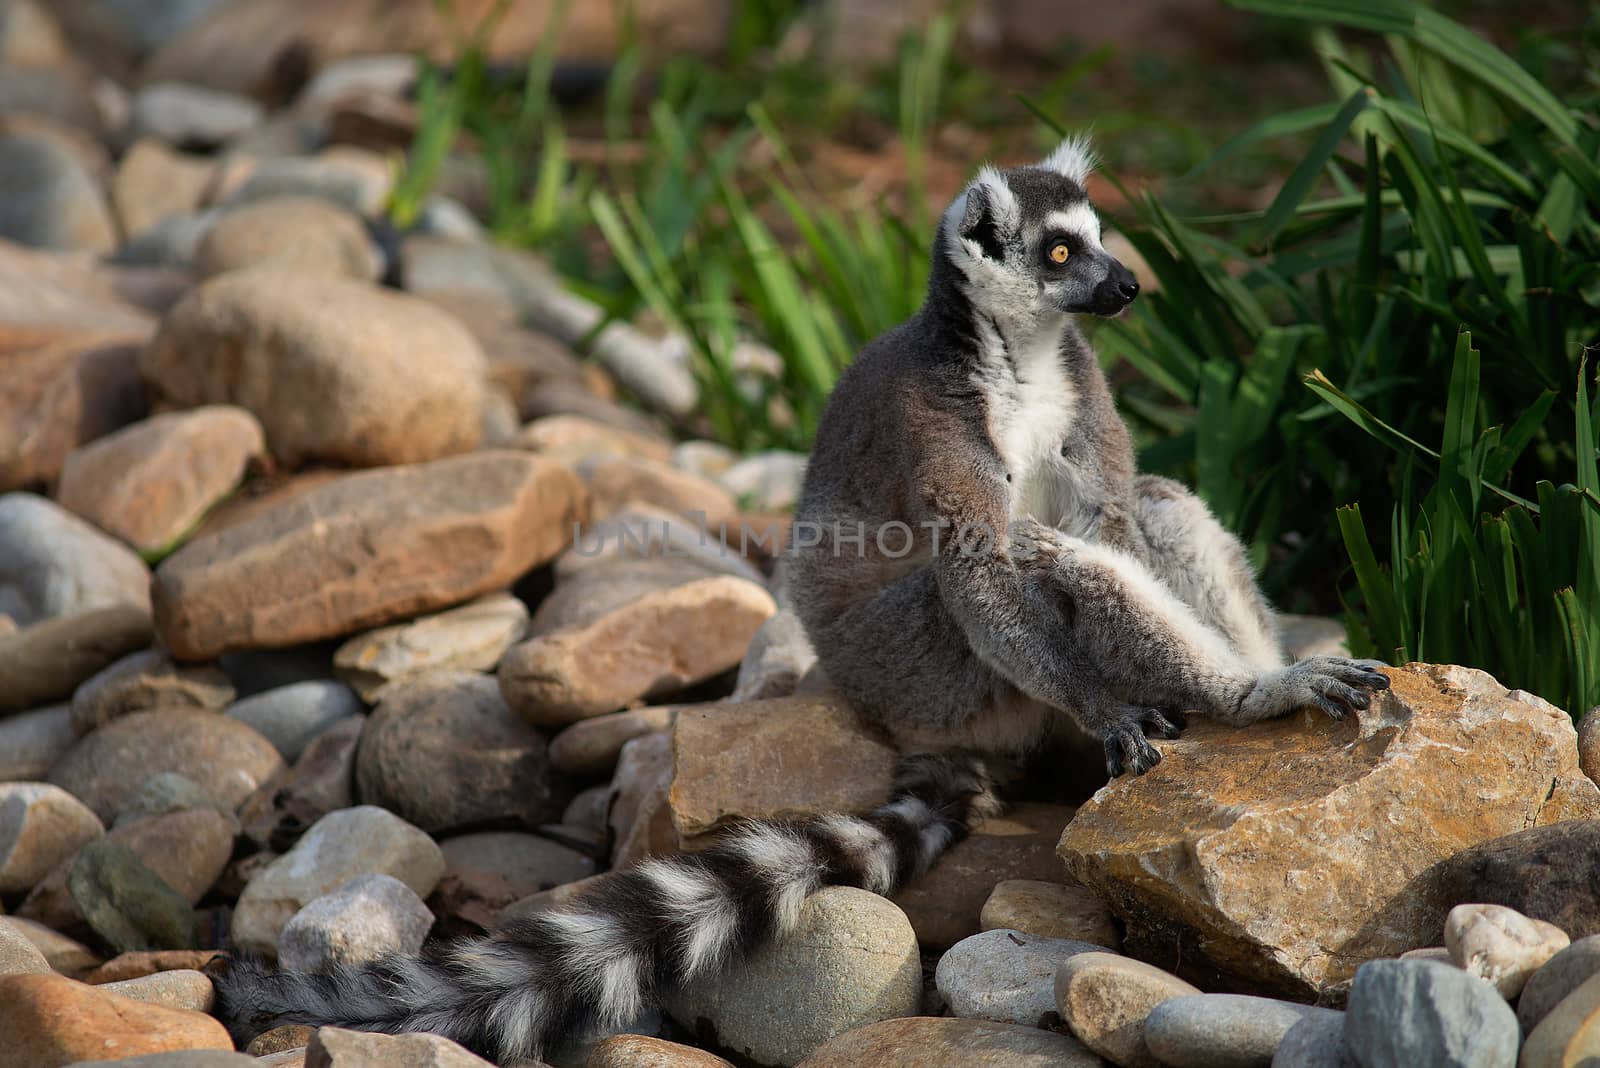 A Ring Tailed Lemur sitting on rocks